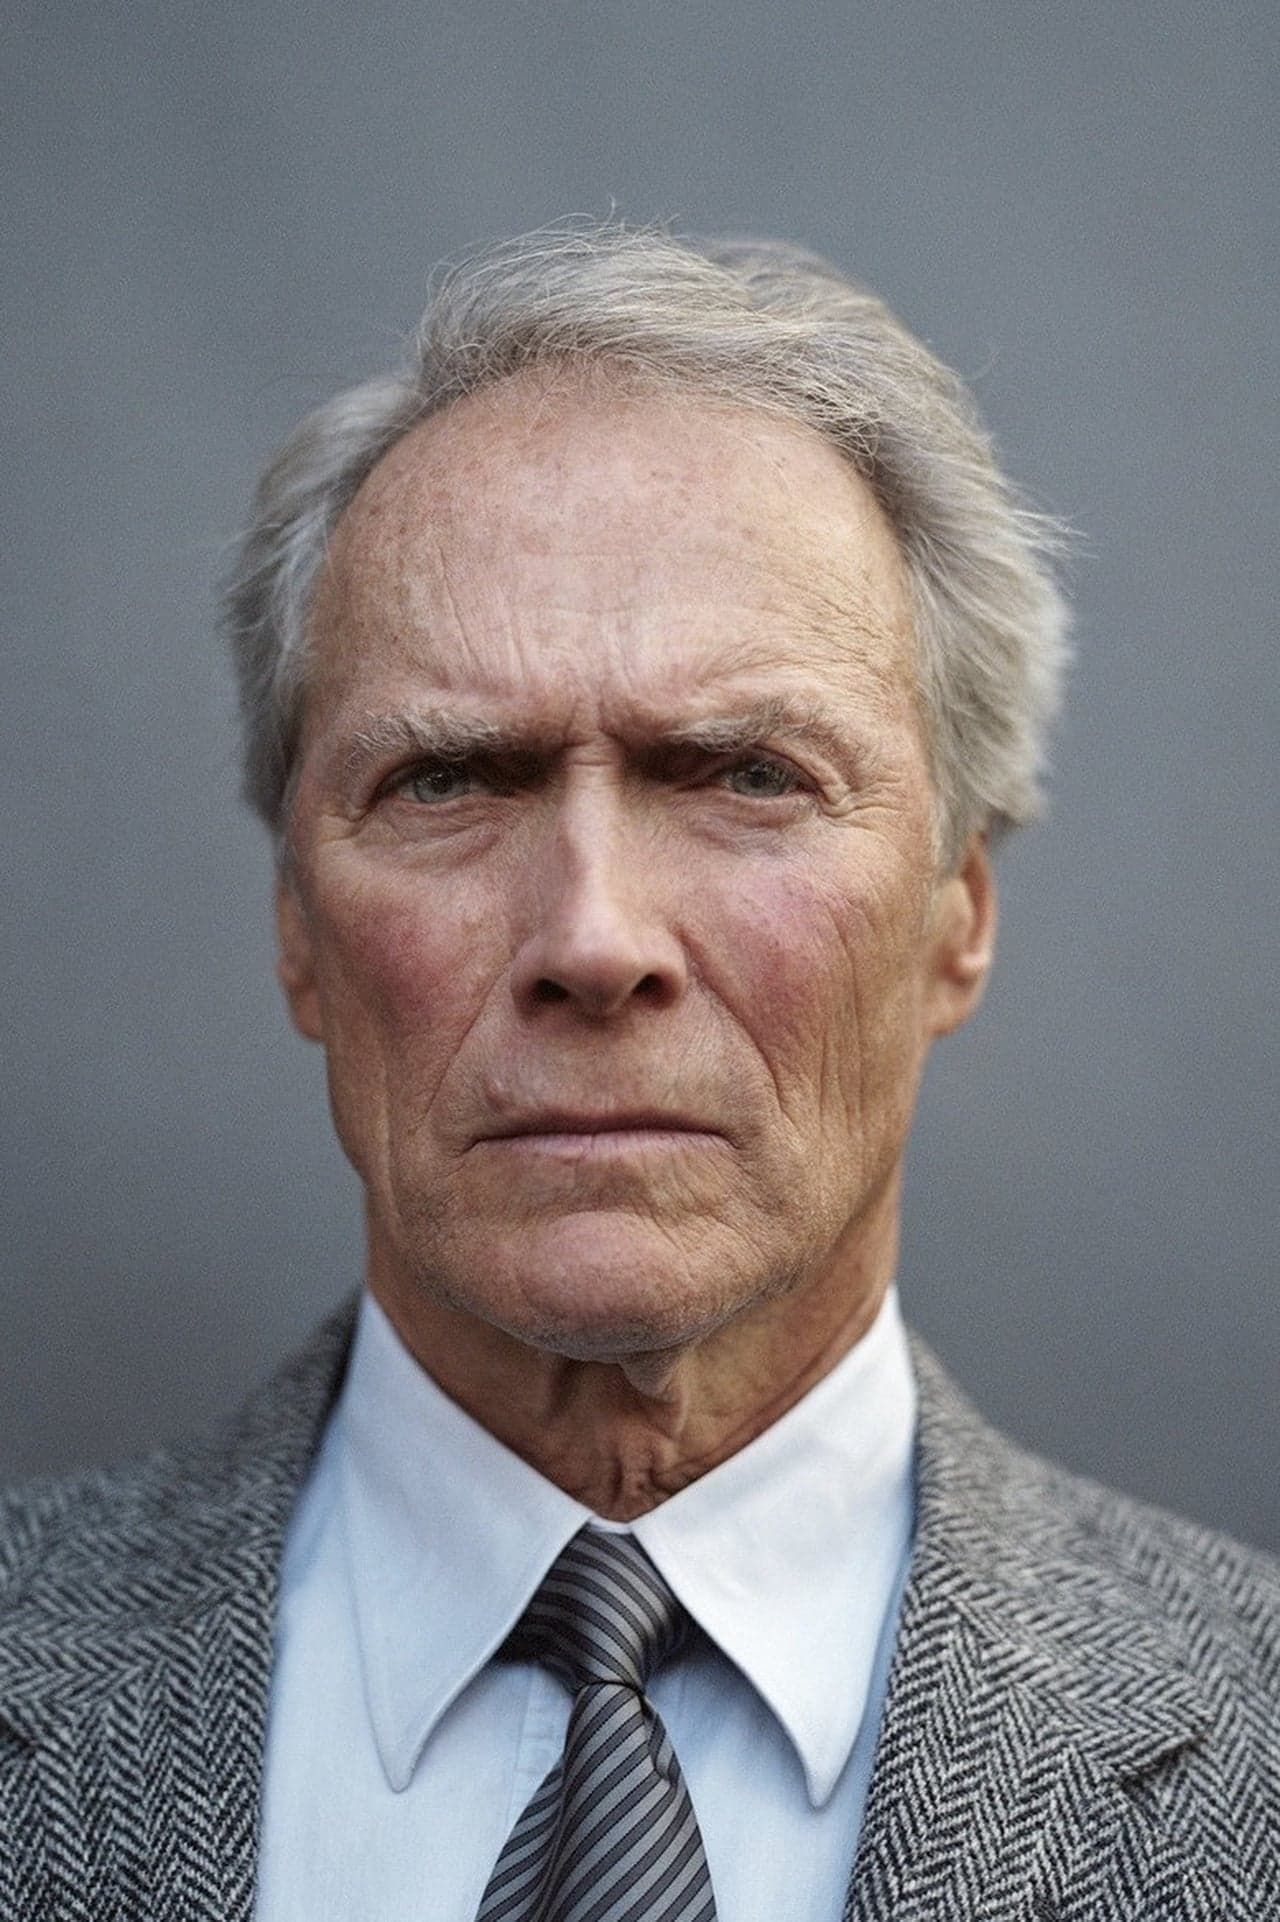 Clint Eastwood | Man at Marina (uncredited)